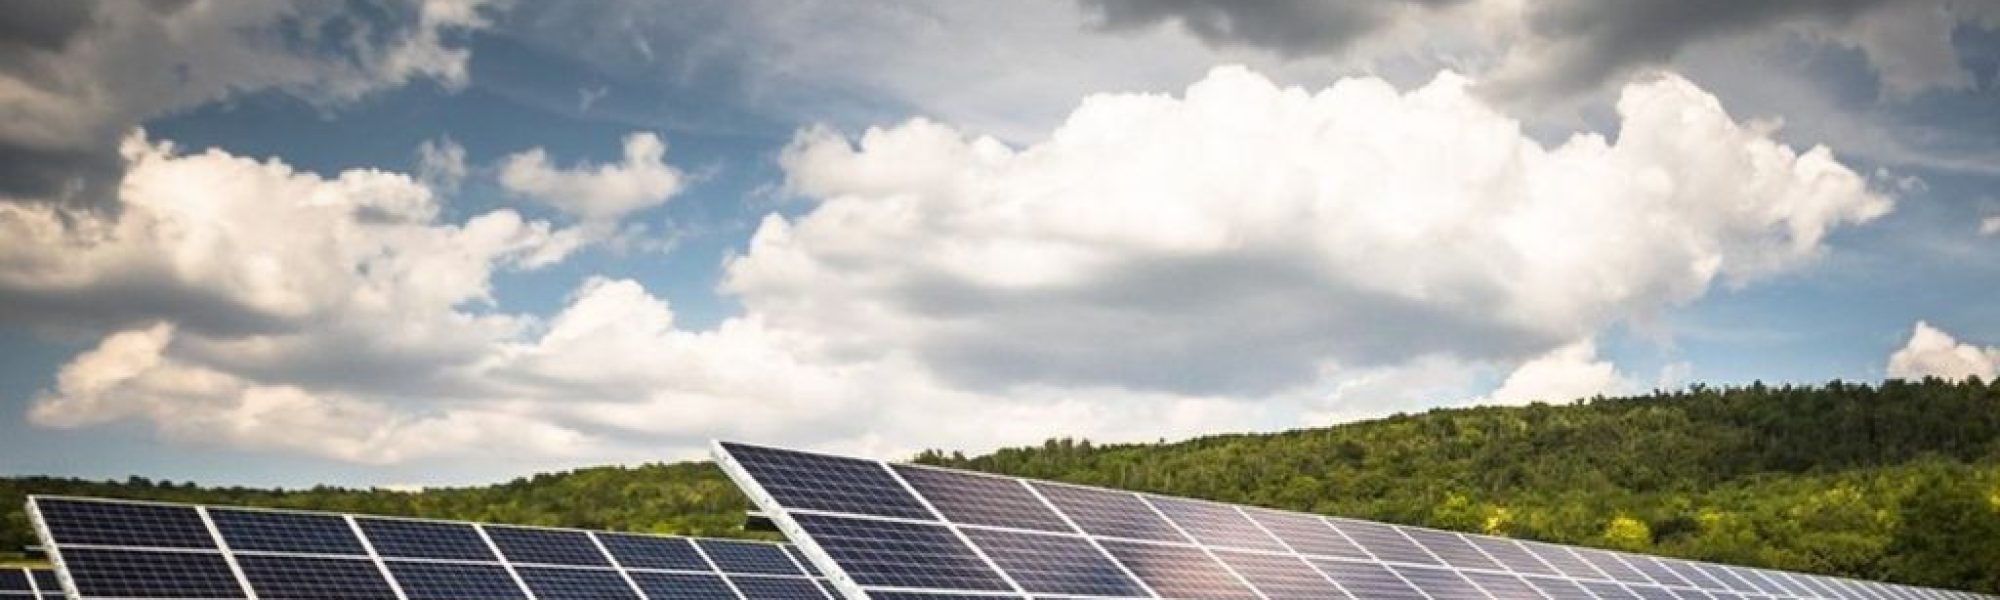 Stockton solar farm opponents claim plans are excessive